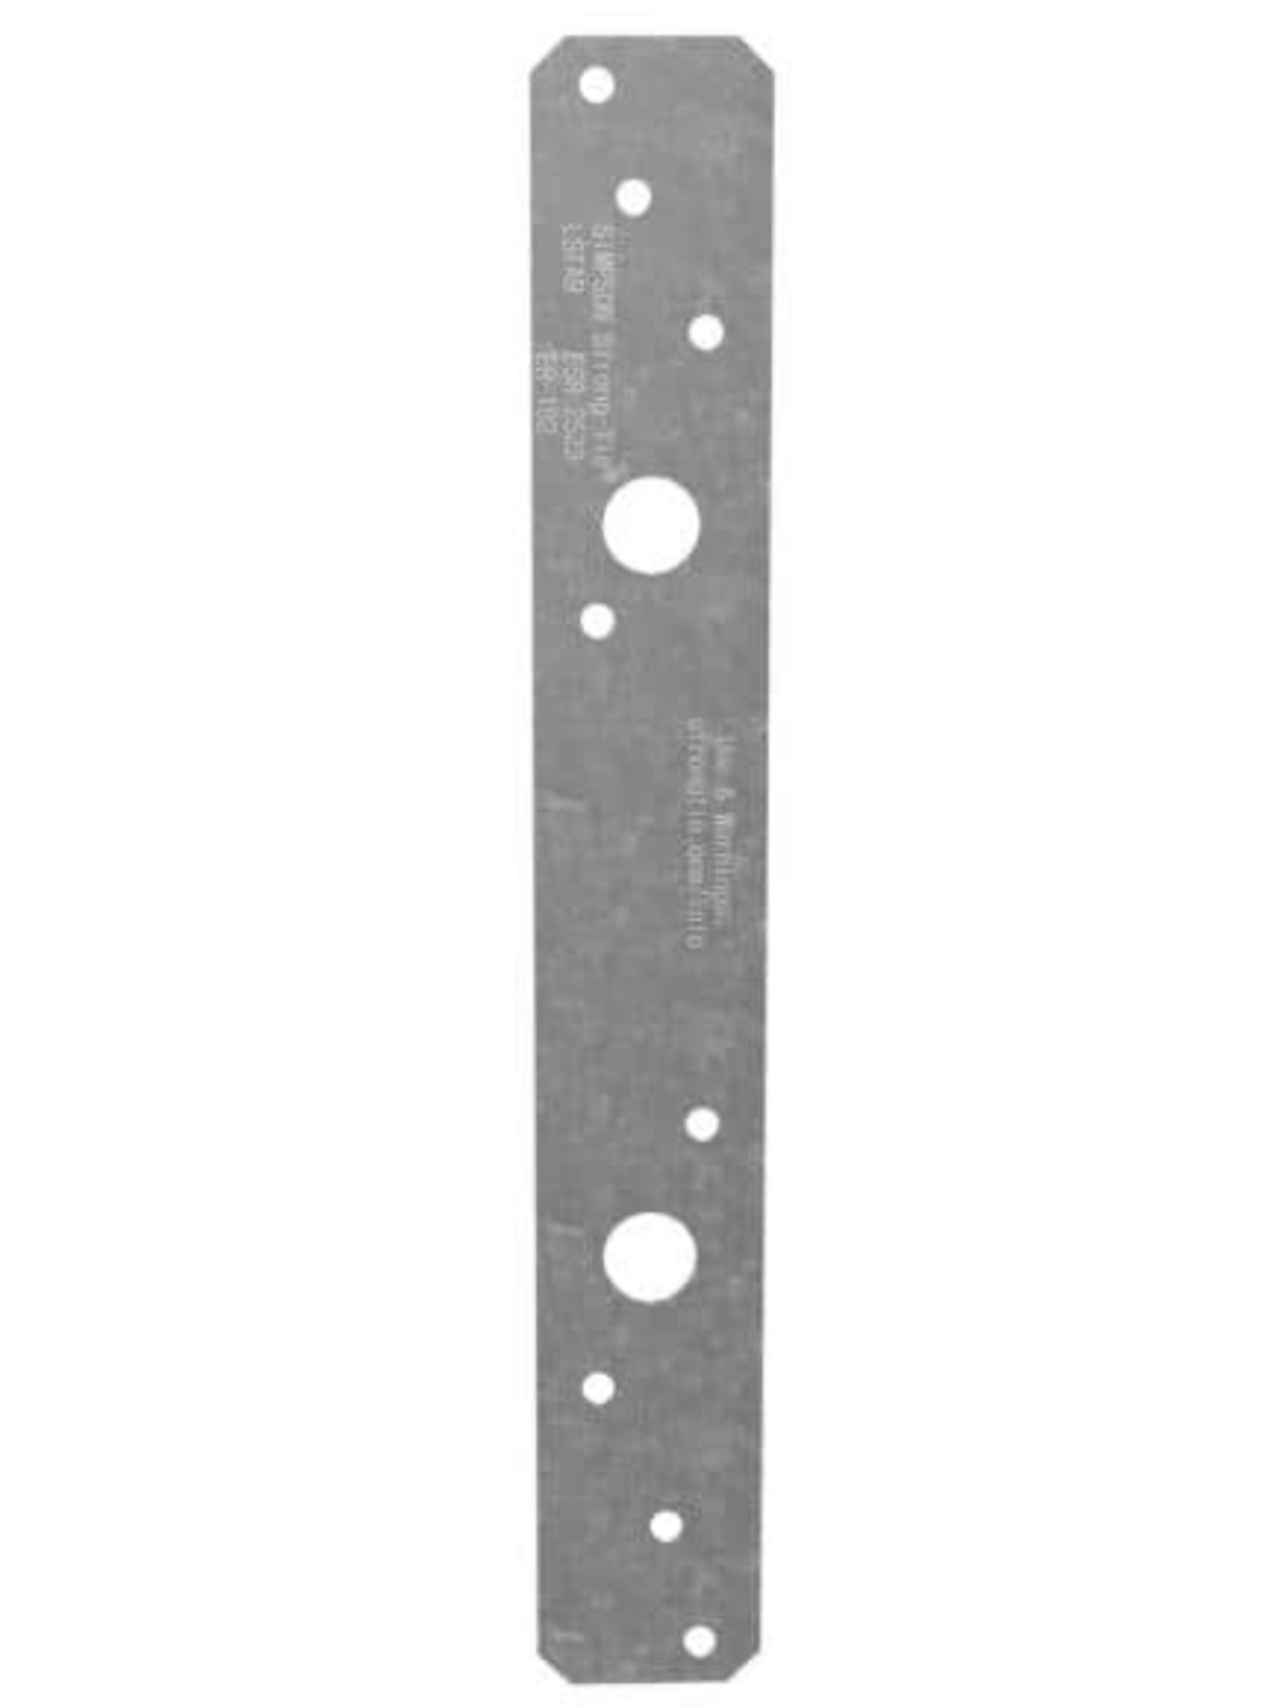 Galvanized strap